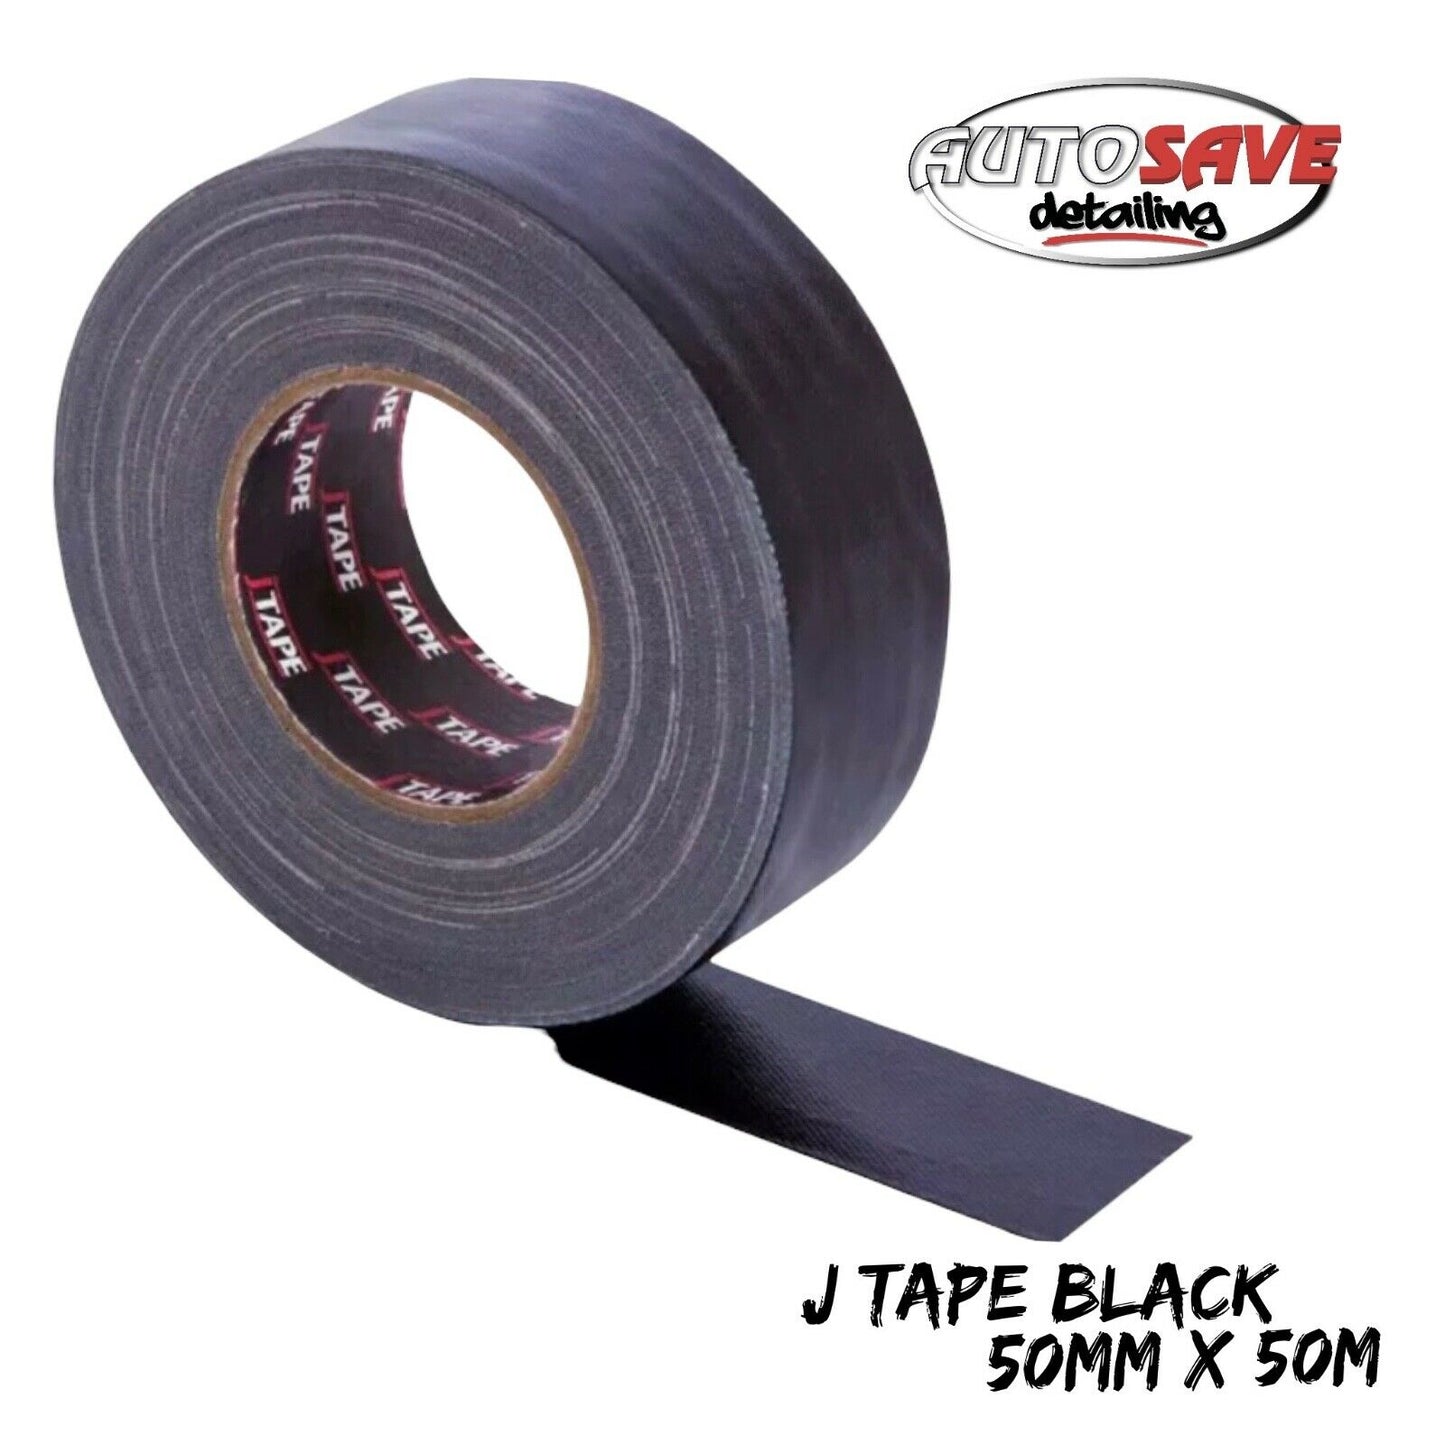 J Tape Black Polythene Adhesive Cloth Tape Duct Tape 50mm x 50m